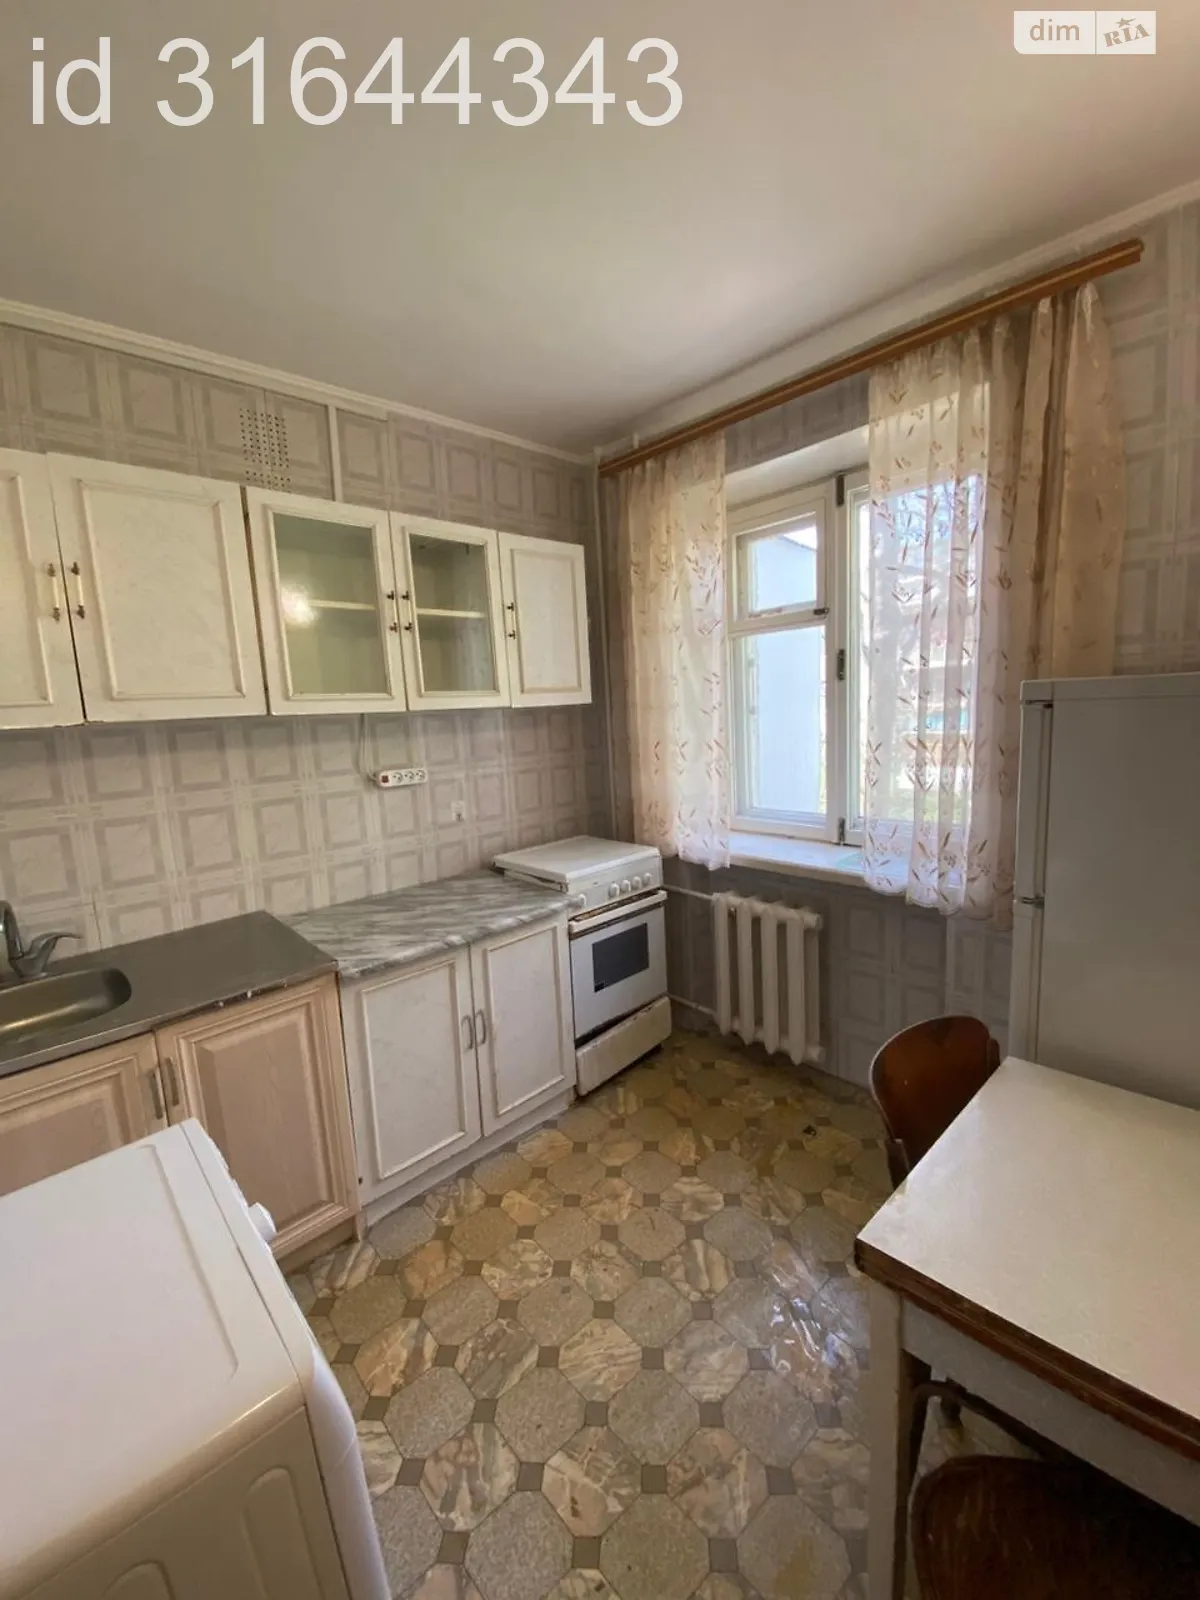 Сдается в аренду 1-комнатная квартира 32 кв. м в Одессе, ул. Ивана и Юрия Лип, 62 - фото 1